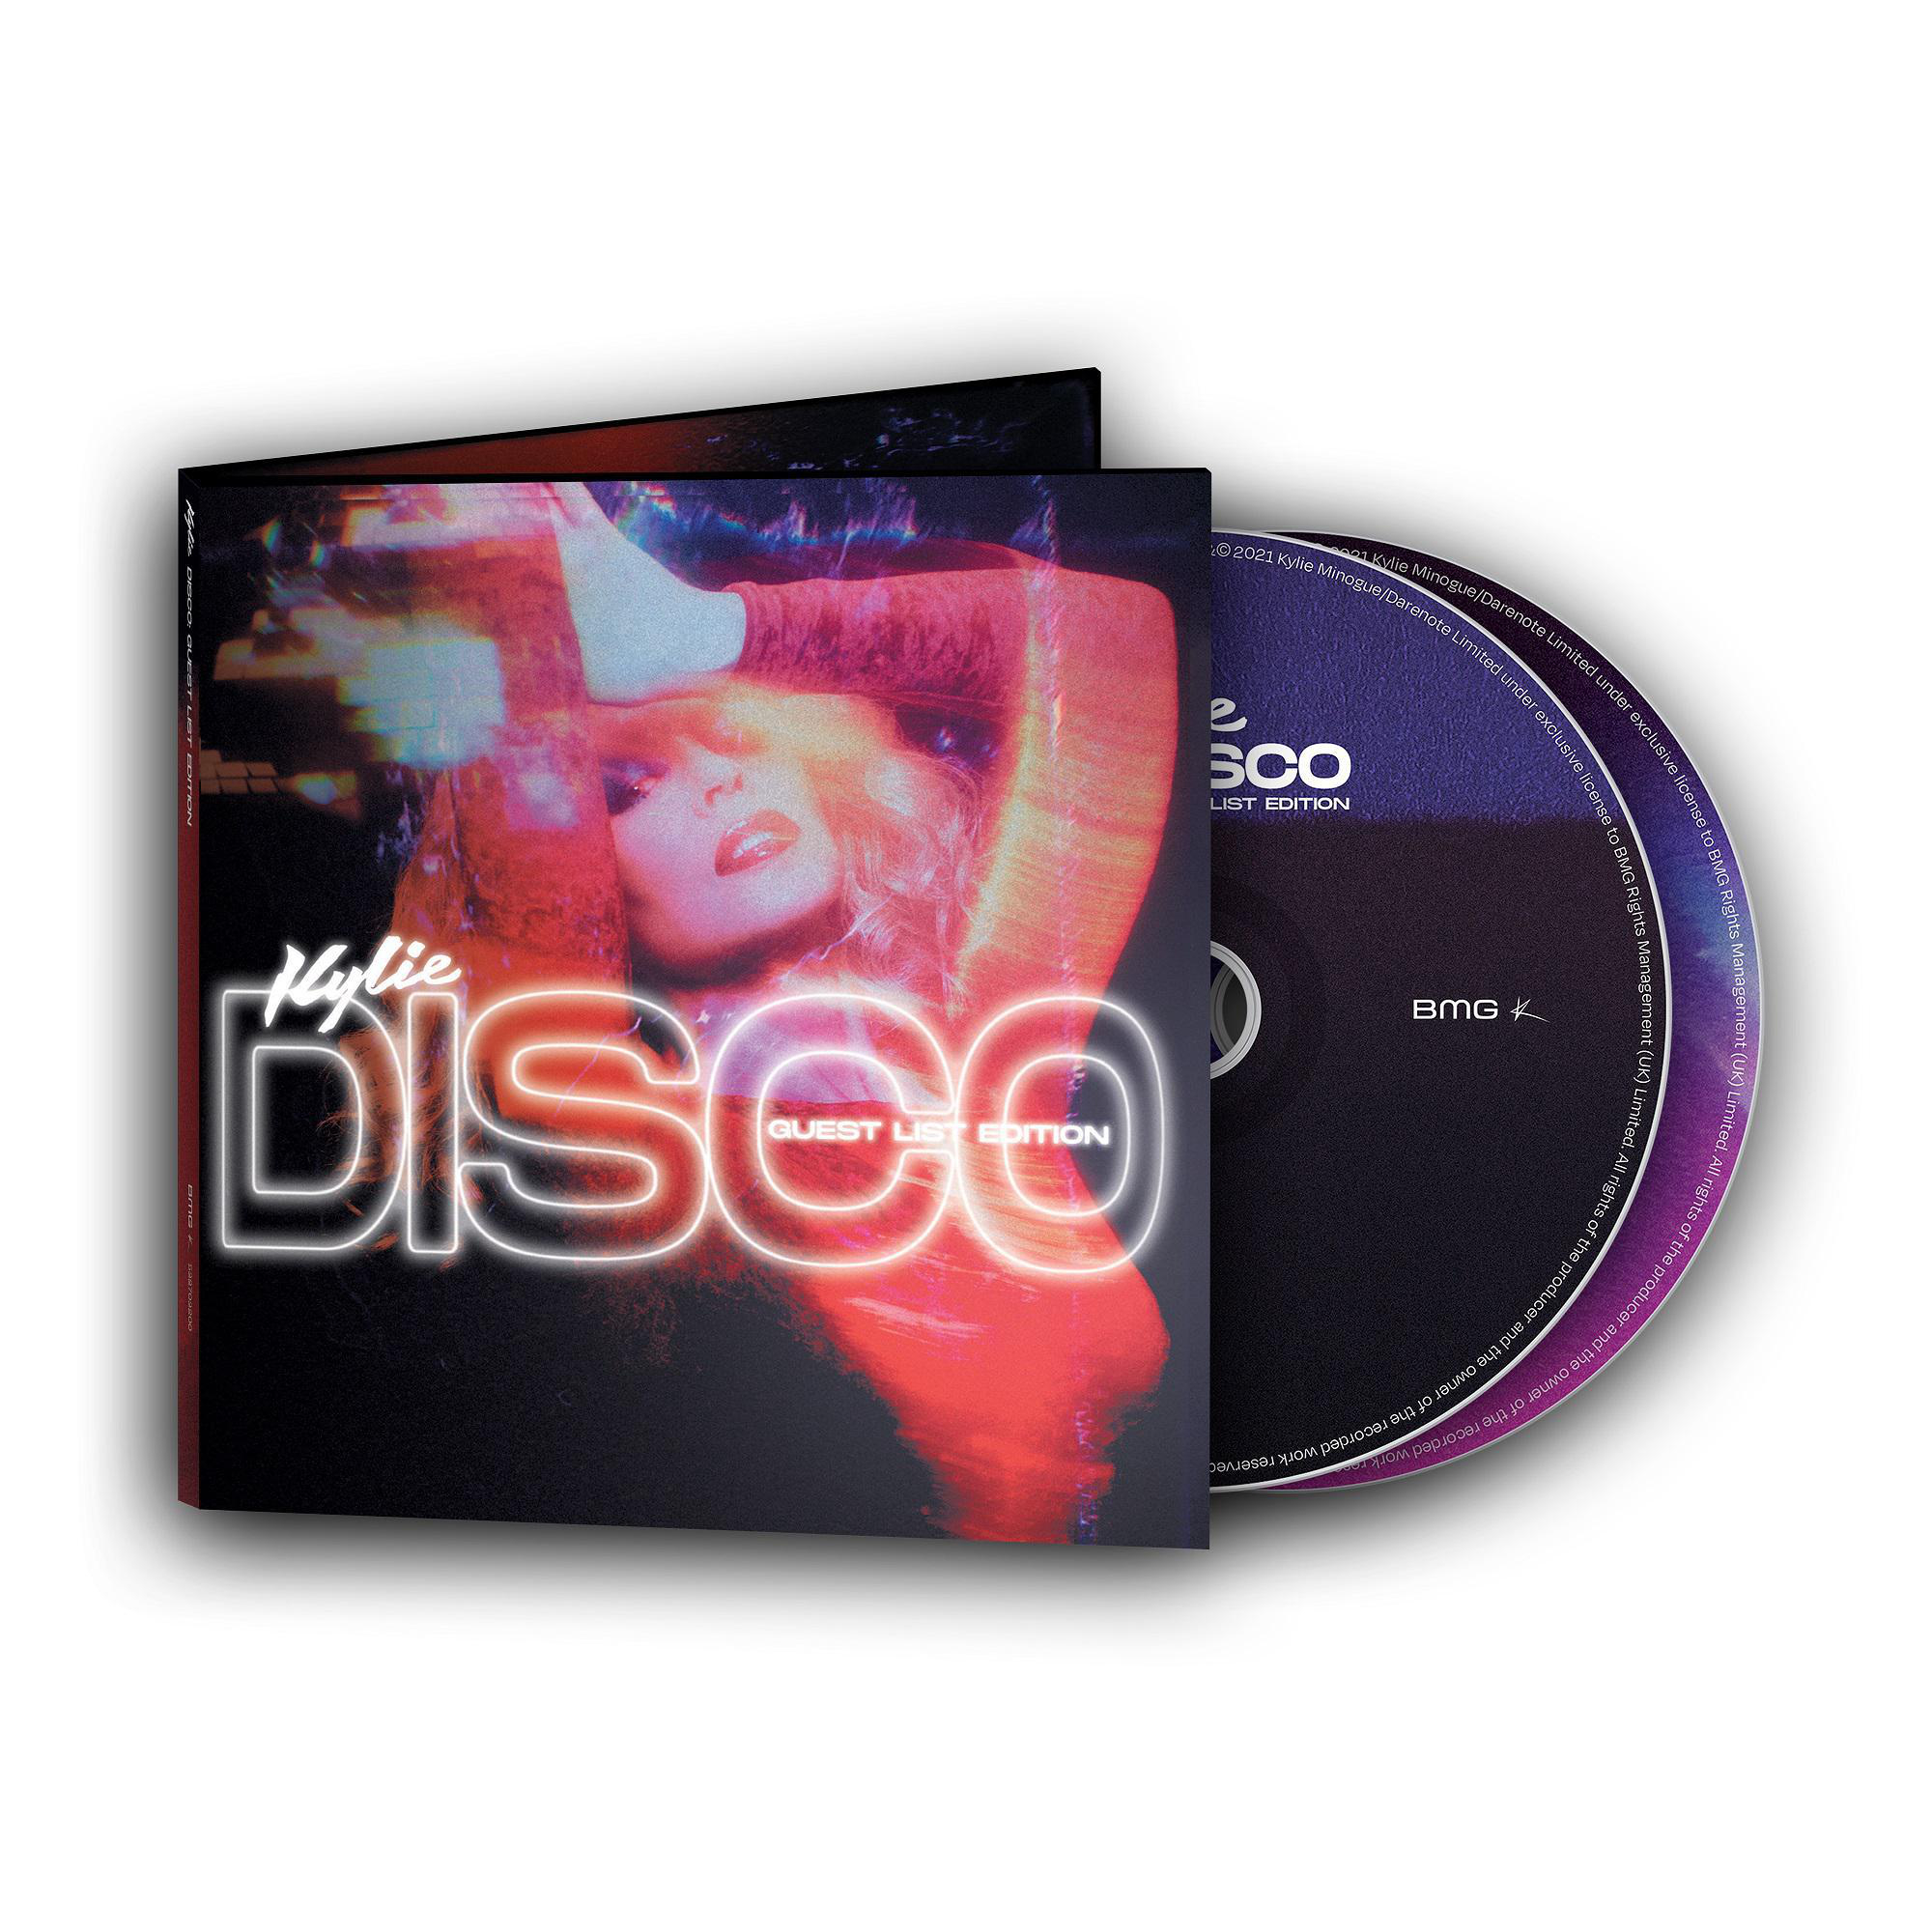 Kylie Minogue - DISCO:Guest (CD) - List Edition